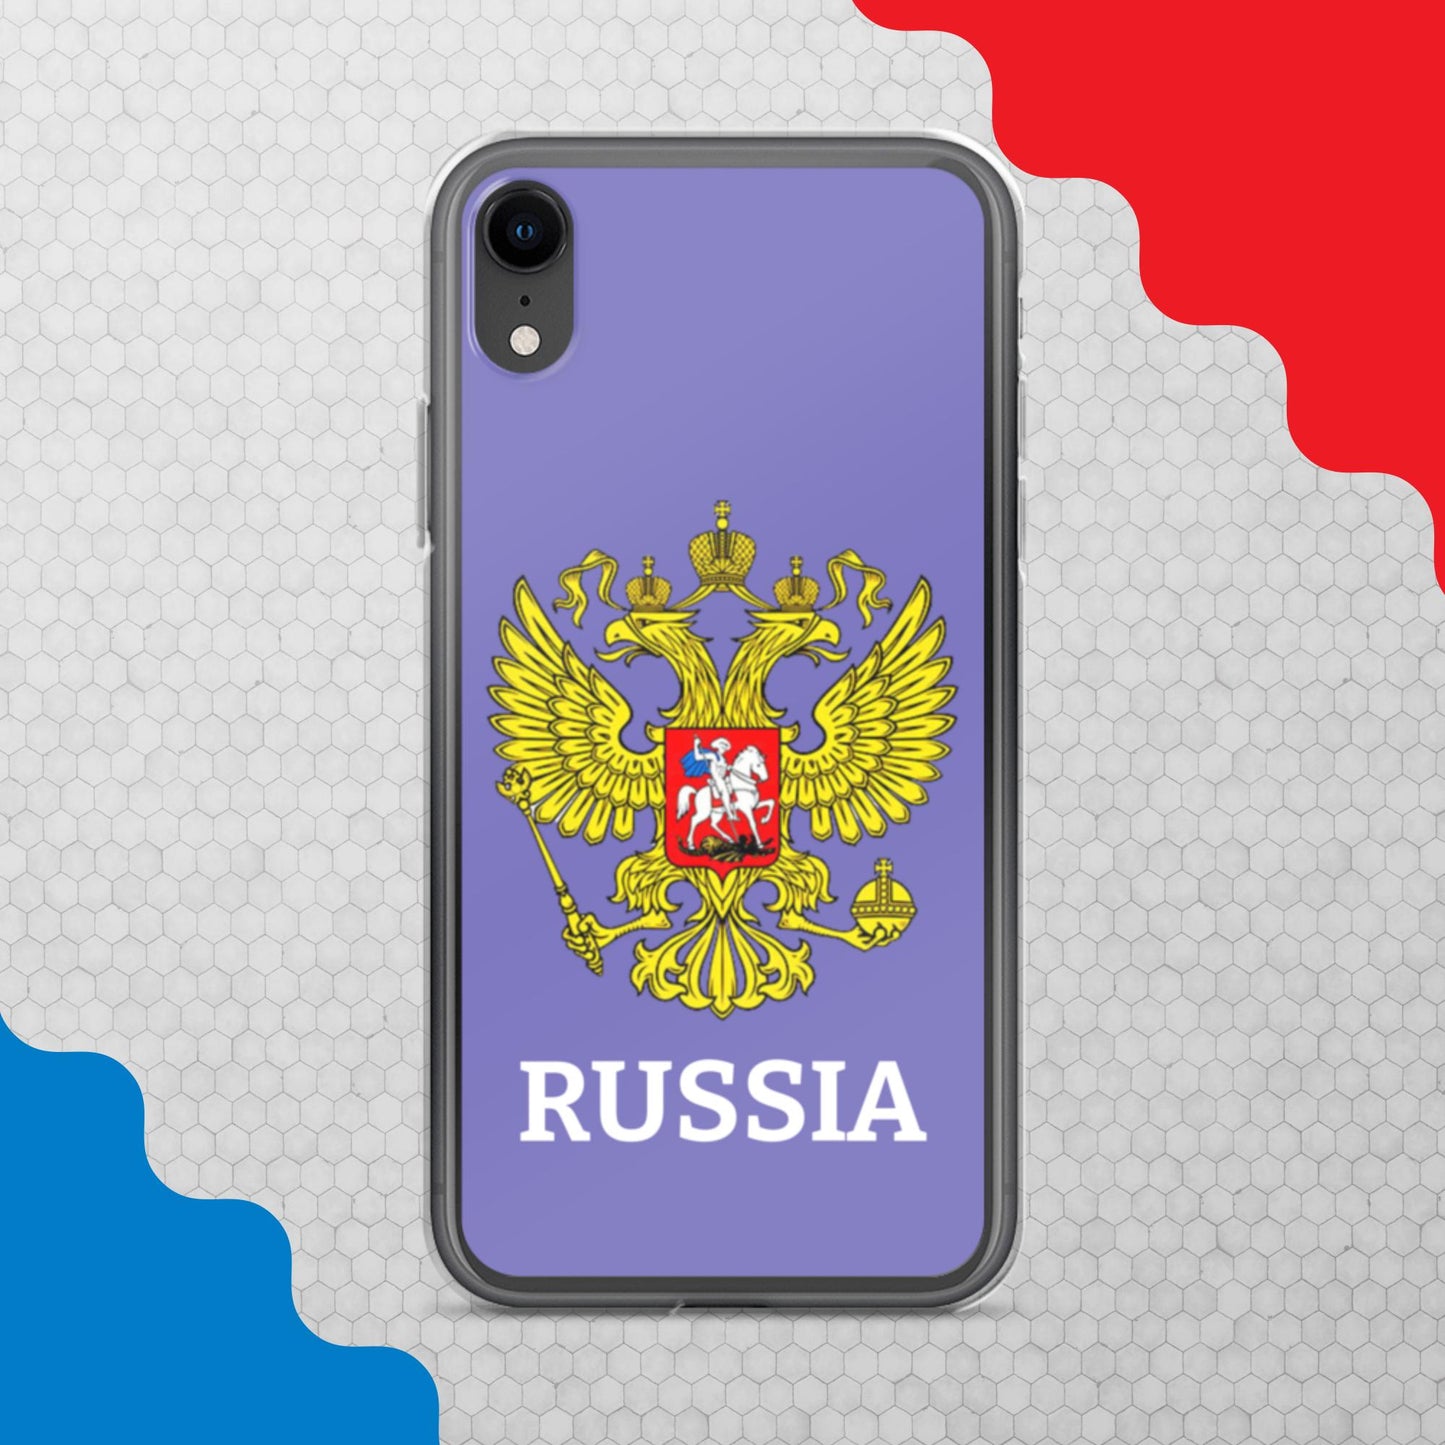 iPhone-Hülle mit Russland-Wappen in violett (alle Modelle)